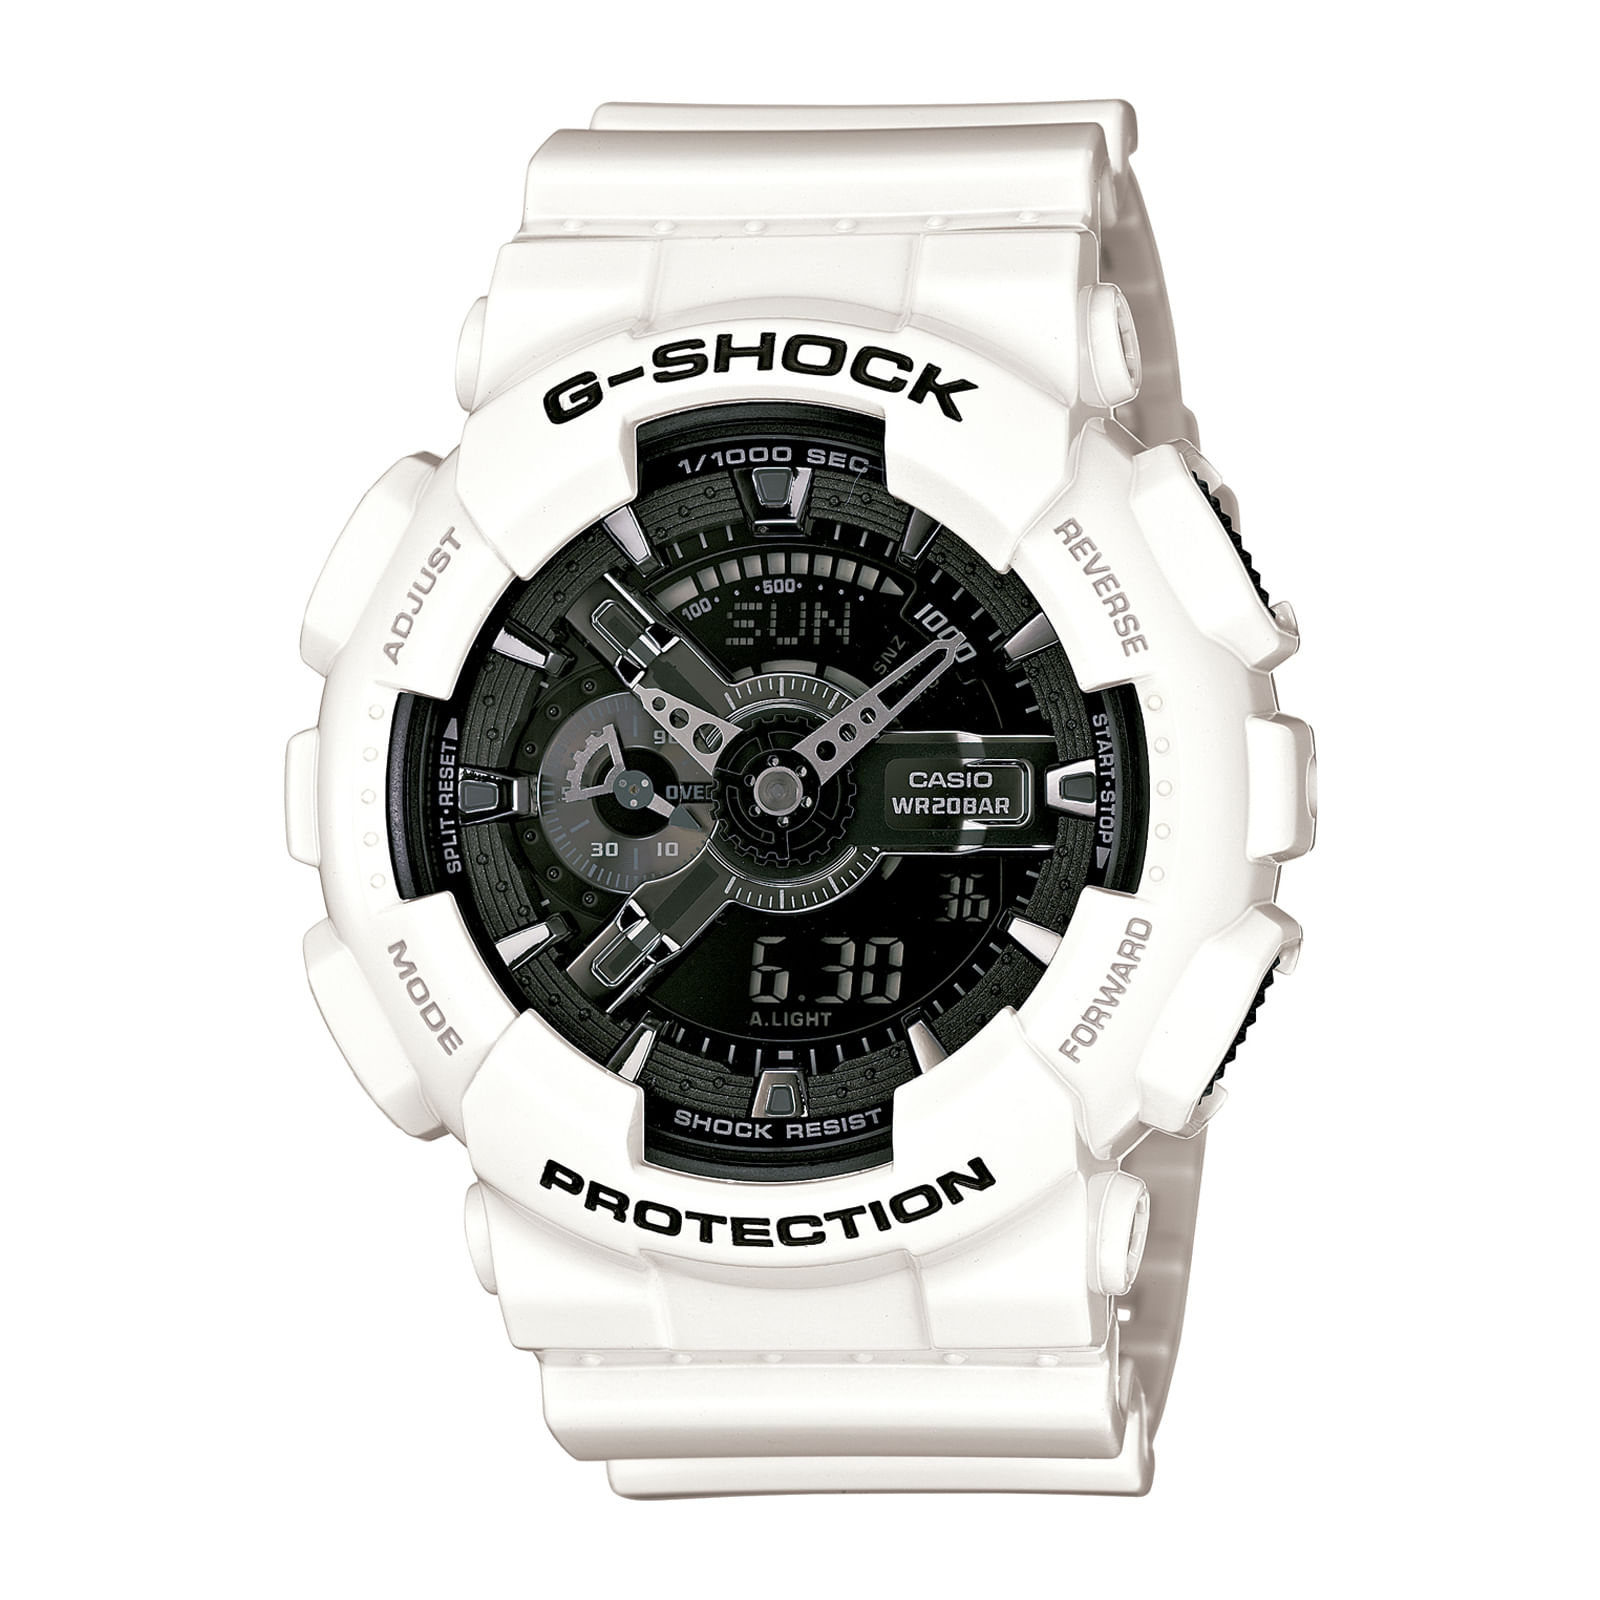 Reloj G-SHOCK GA-110GW-7A Resina Hombre Blanco